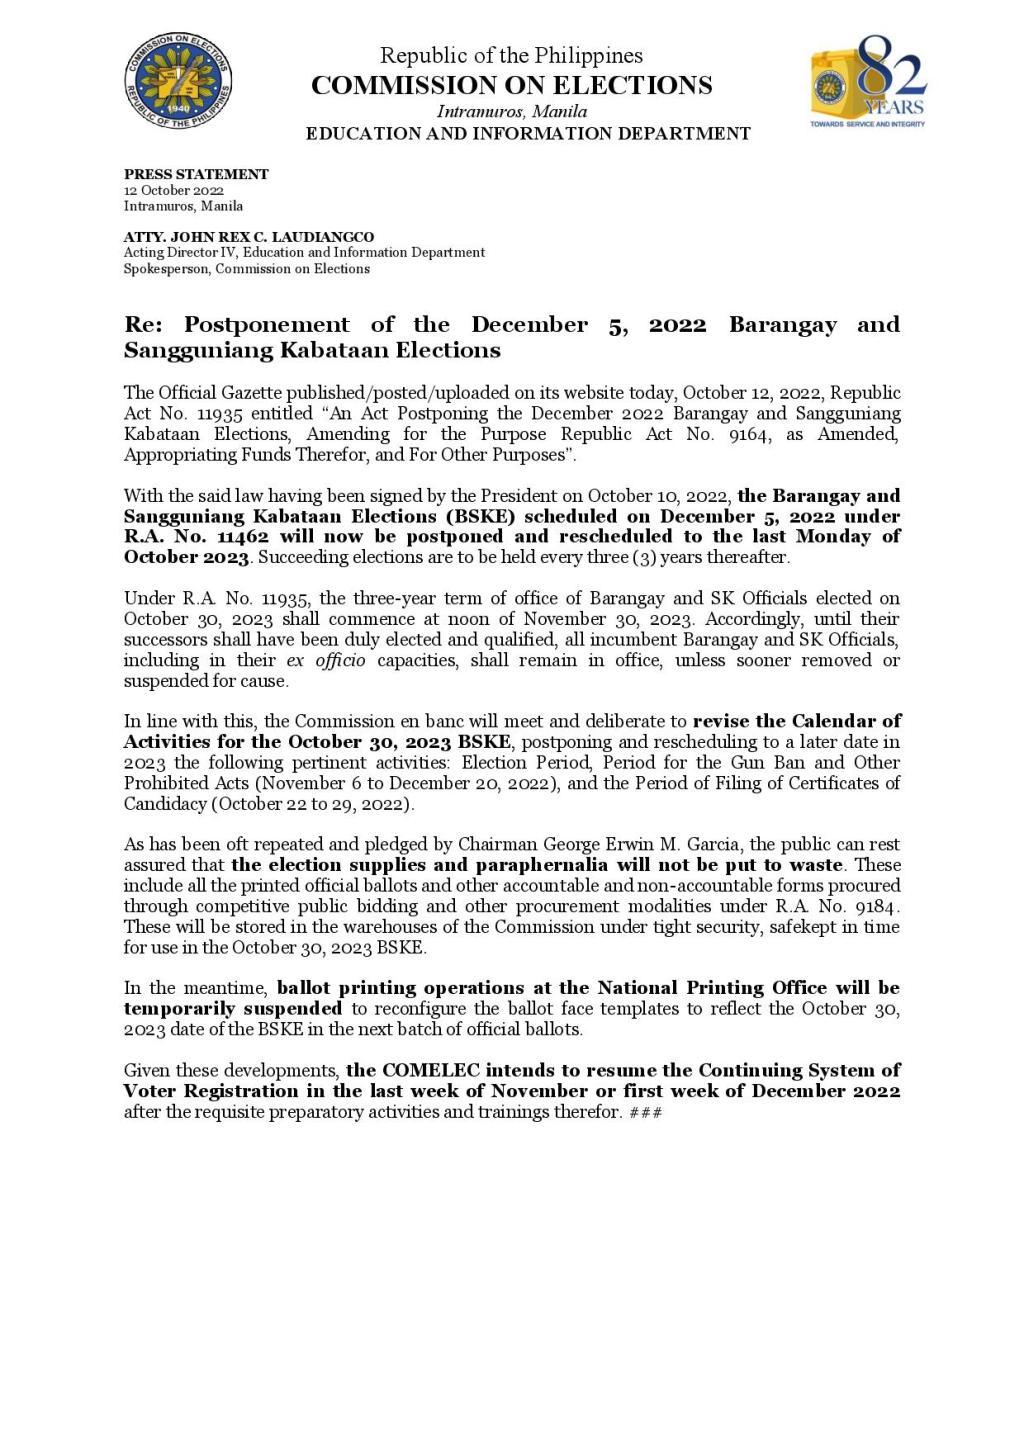 President Ferdinand Marcos Jr. has signed into law the measure postponing the December 5, 2022 Barangay and Sangguniang Kabataan Elections